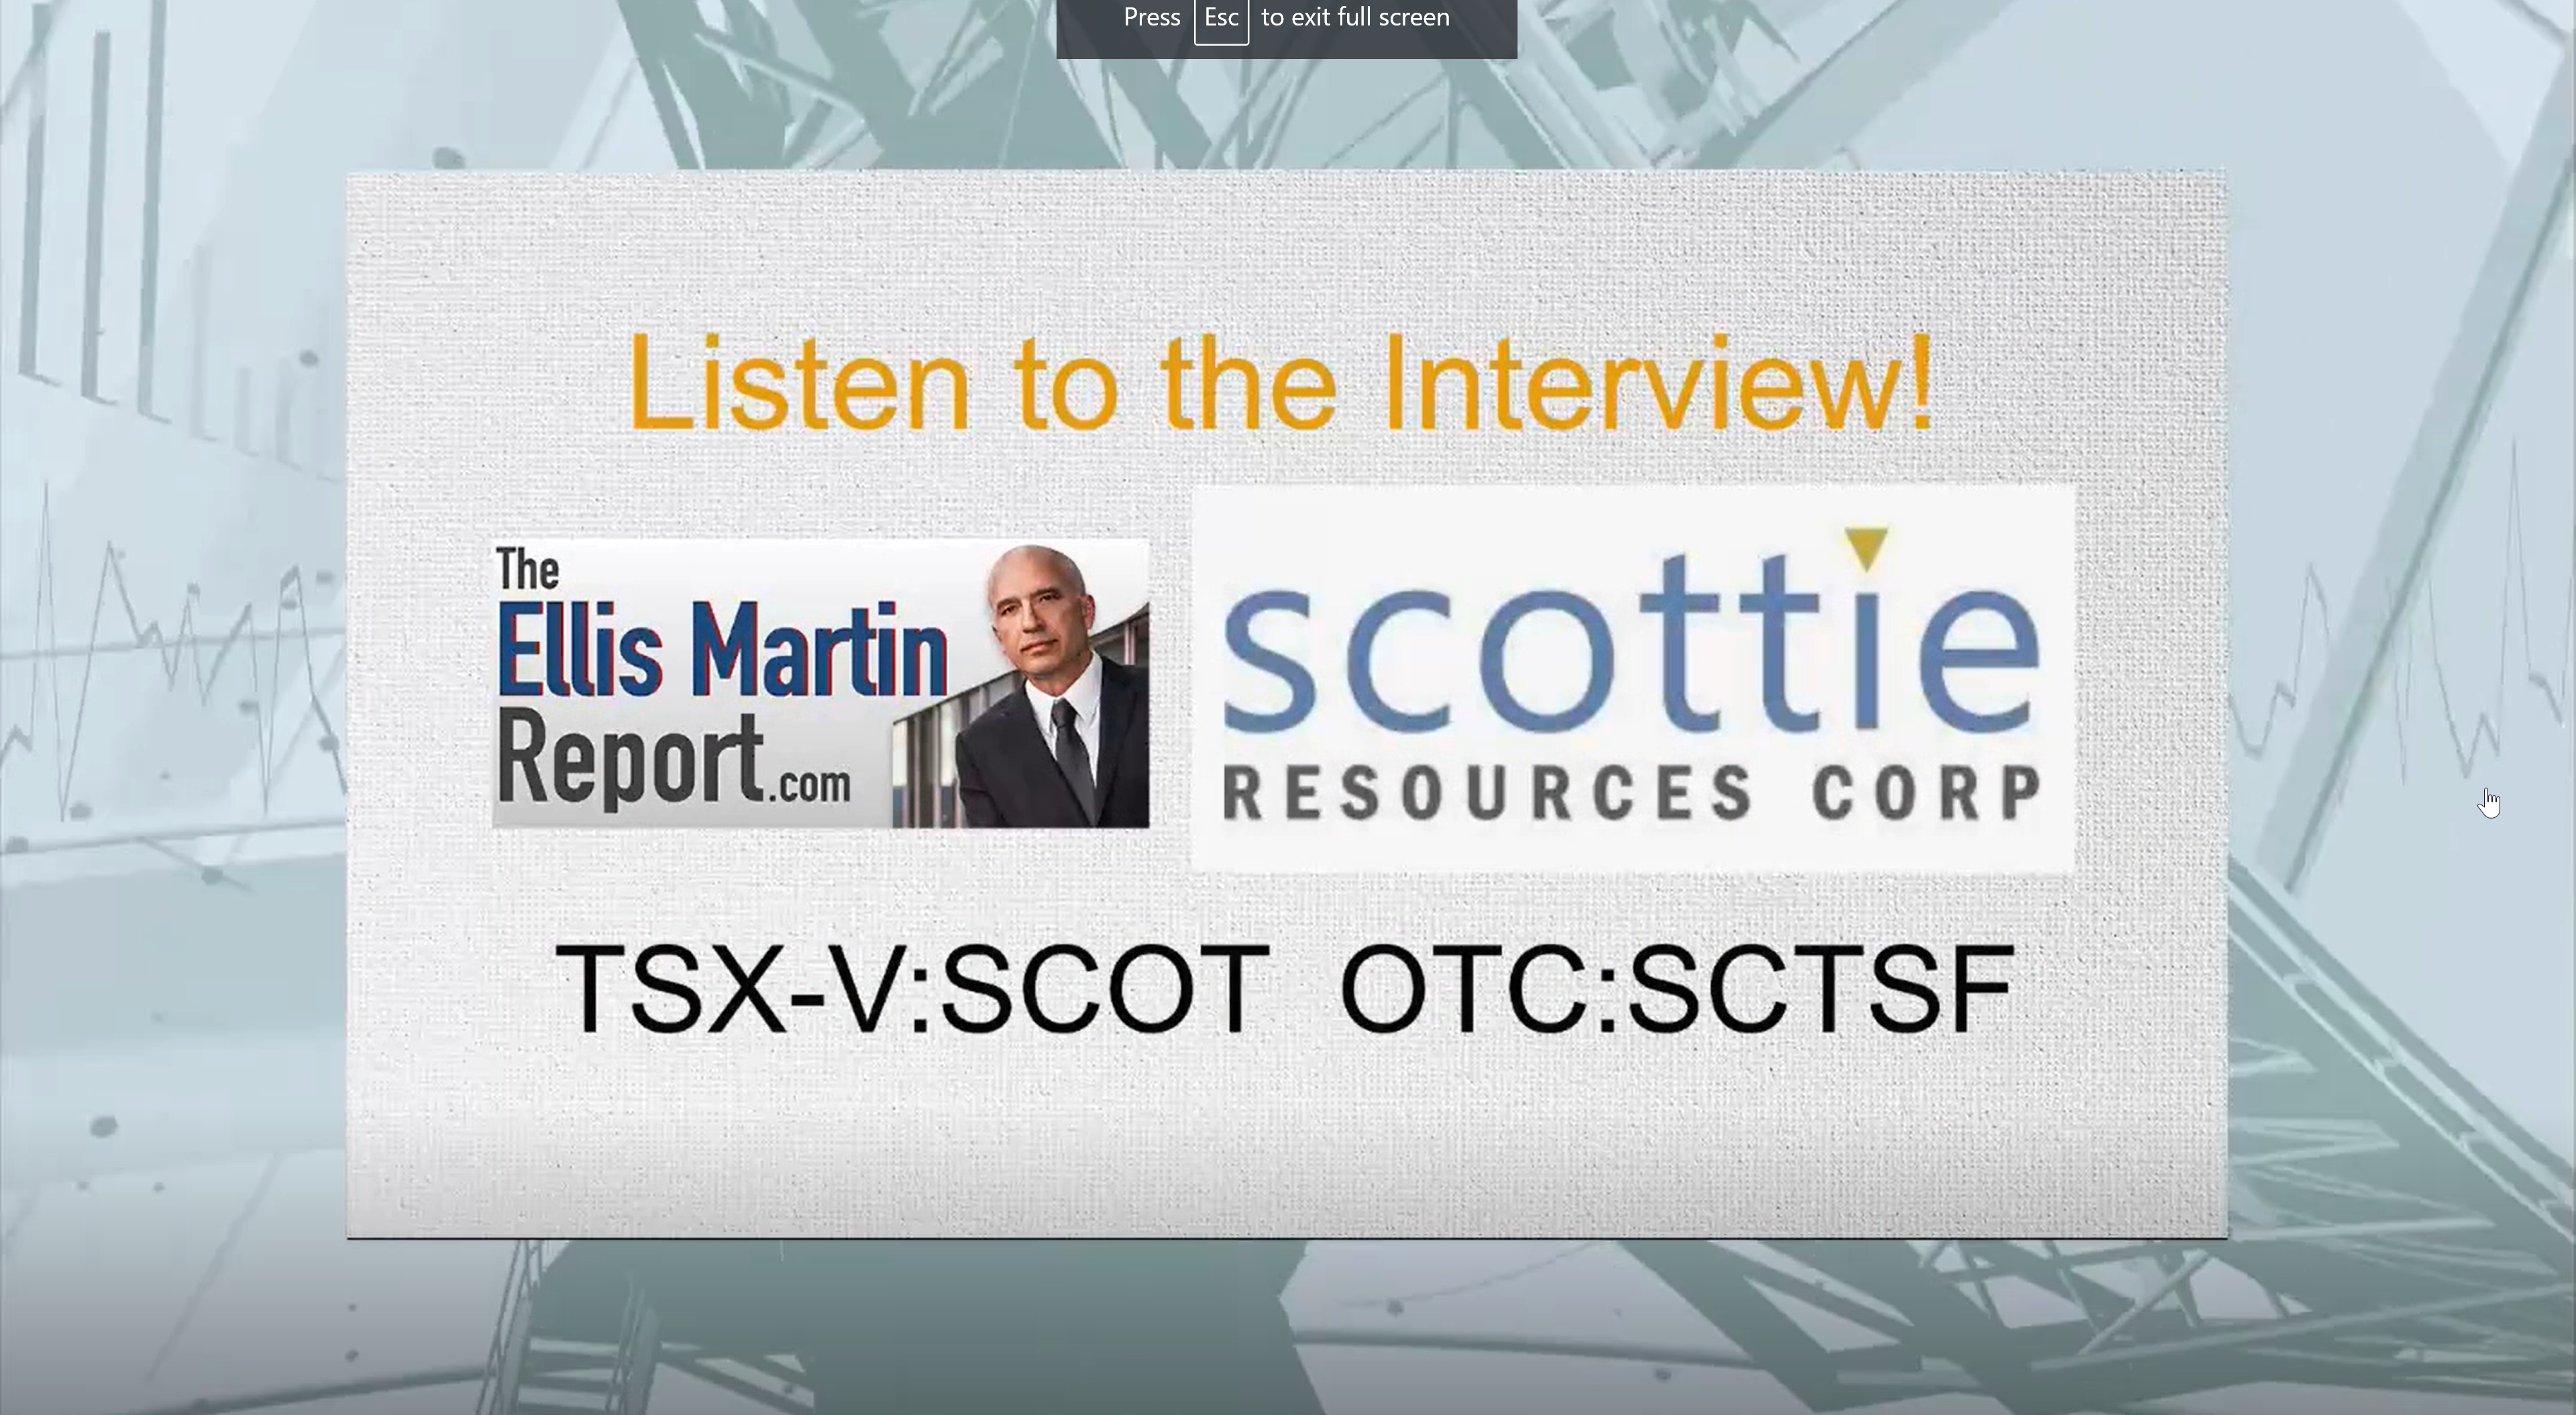 Scottie Resources on the Ellis Martin Report